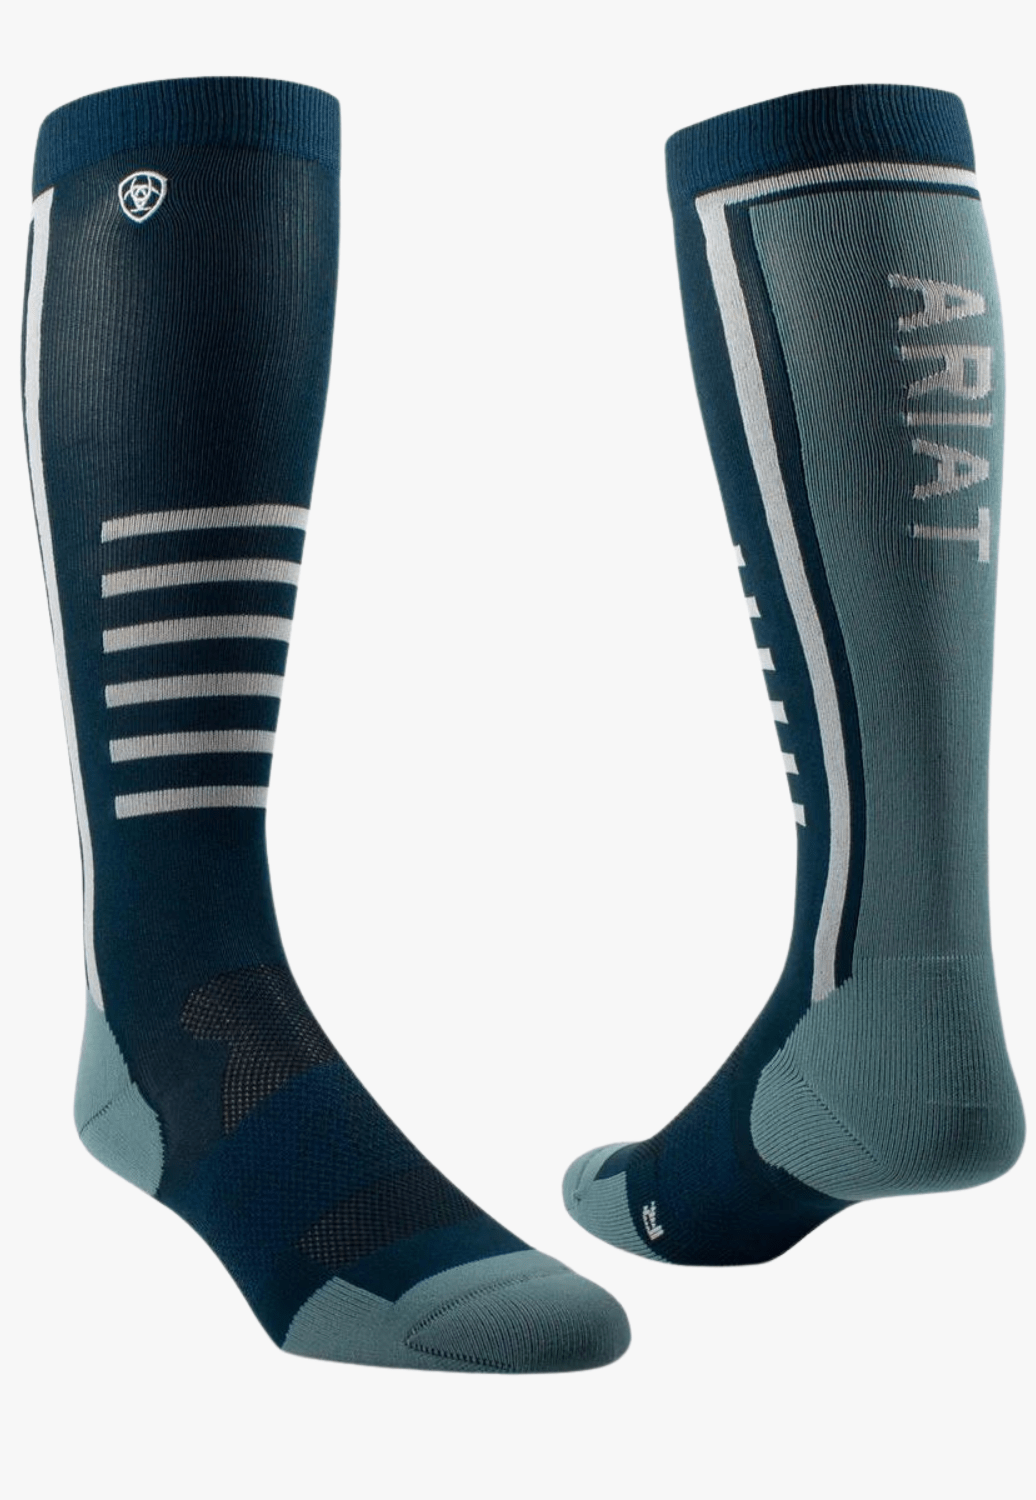 Ariat ACCESSORIES-Socks Teal/Arctic Ariat Uni Ariattek Slimline Performance Socks